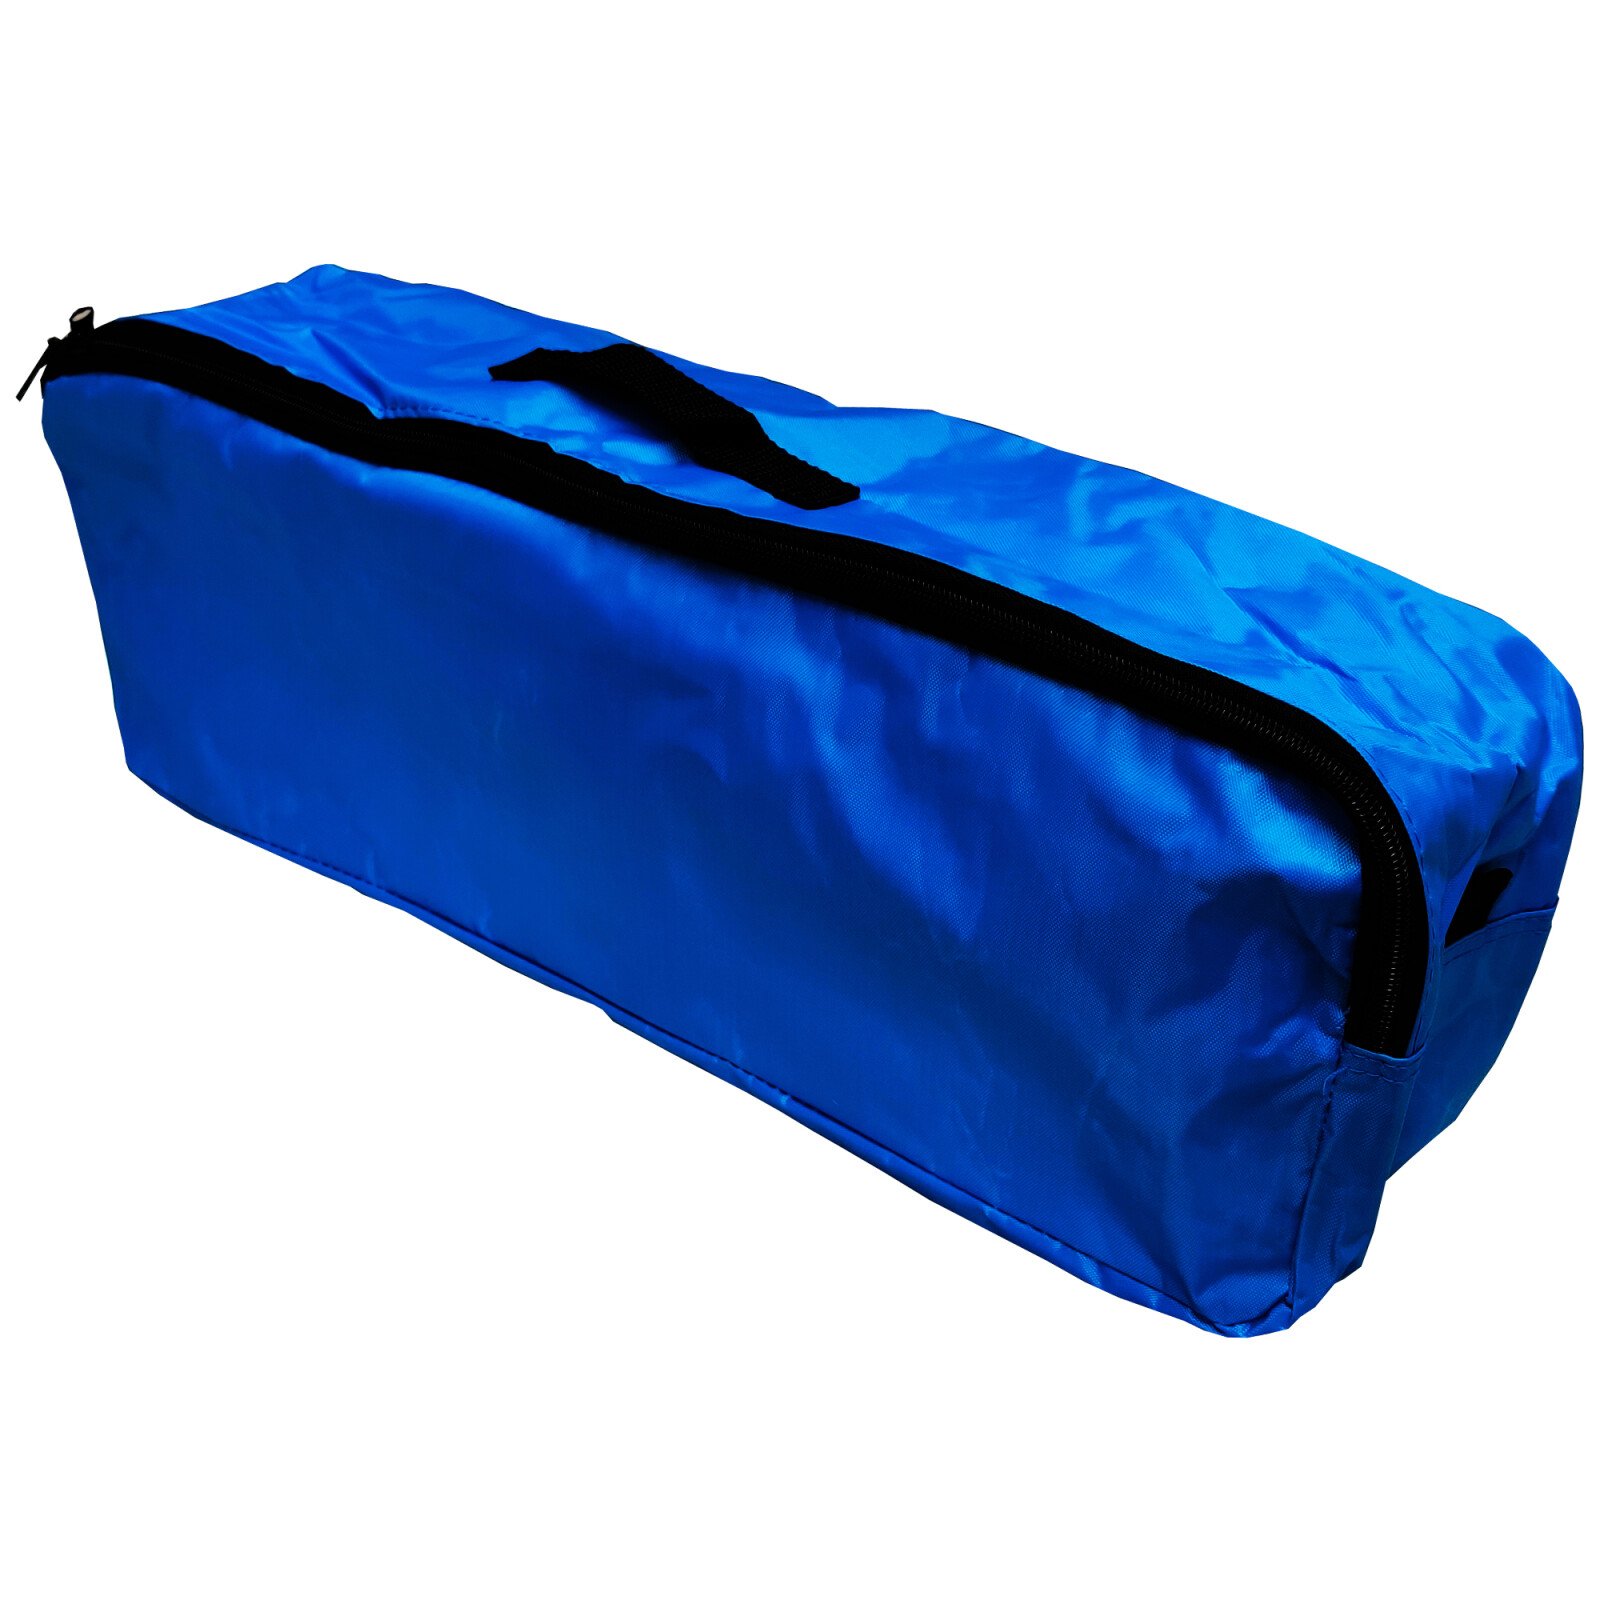 Cridem trunk organizer bag - Navy blue/Black thumb